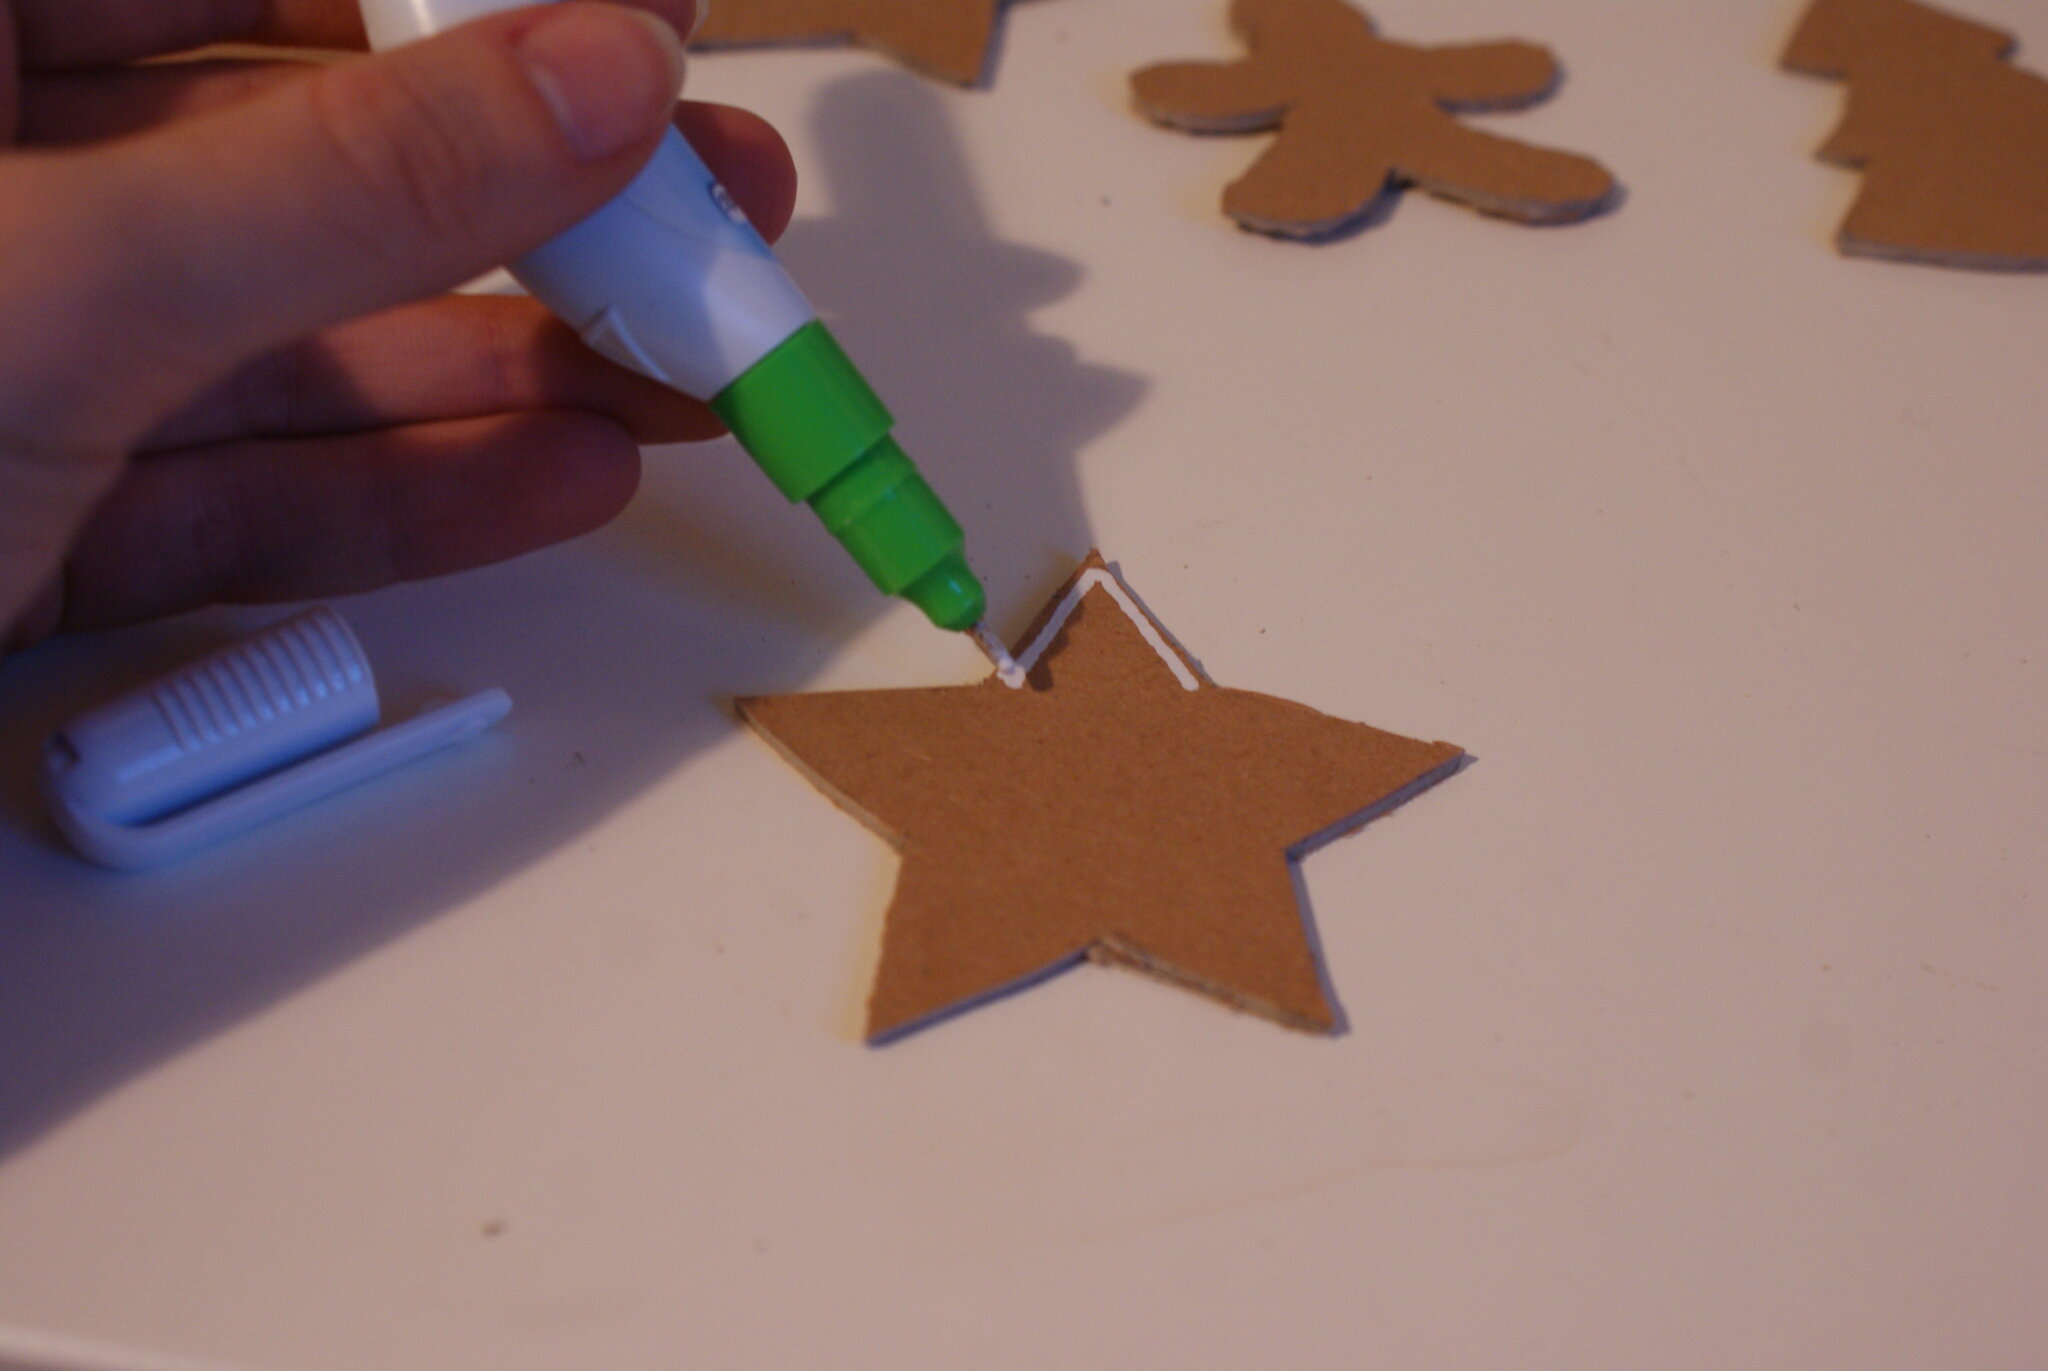 diy cardboard gingerbread cookies christmas tree ornaments idea easy last minute francinesplaceblog tutorial